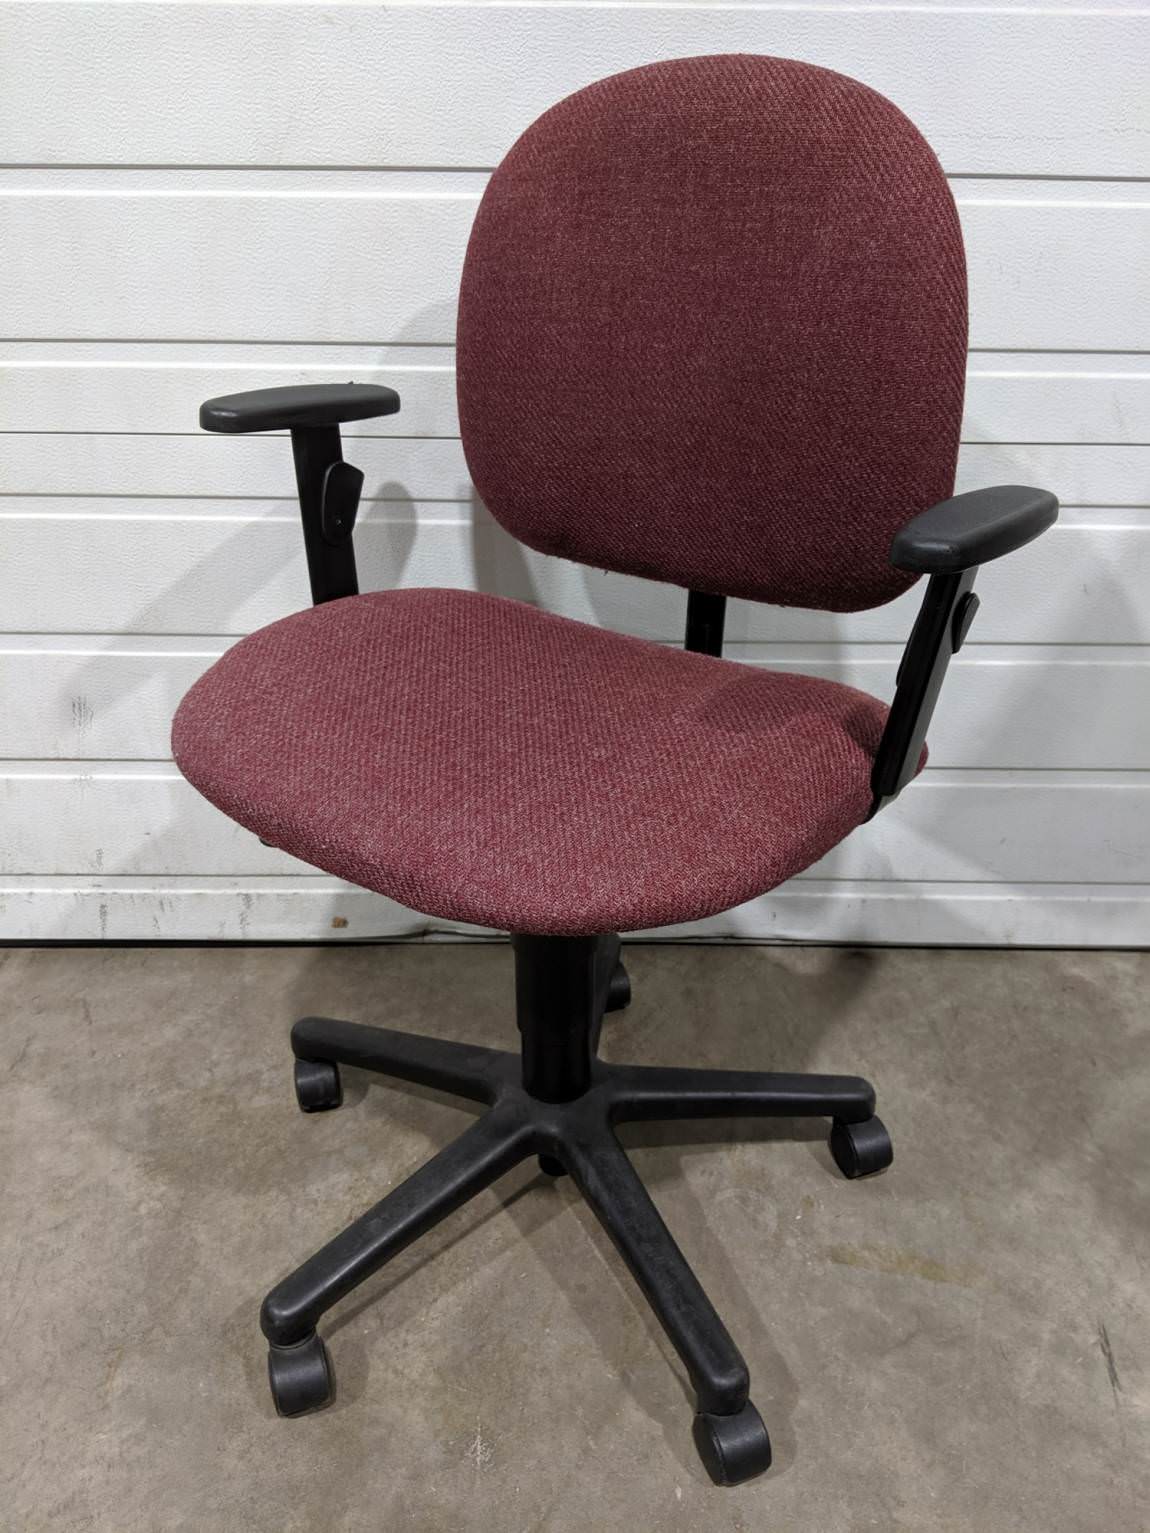 https://madisonliquidators.com/images/p/1150/3028-hon-red-fabric-rolling-office-chair-2.jpg